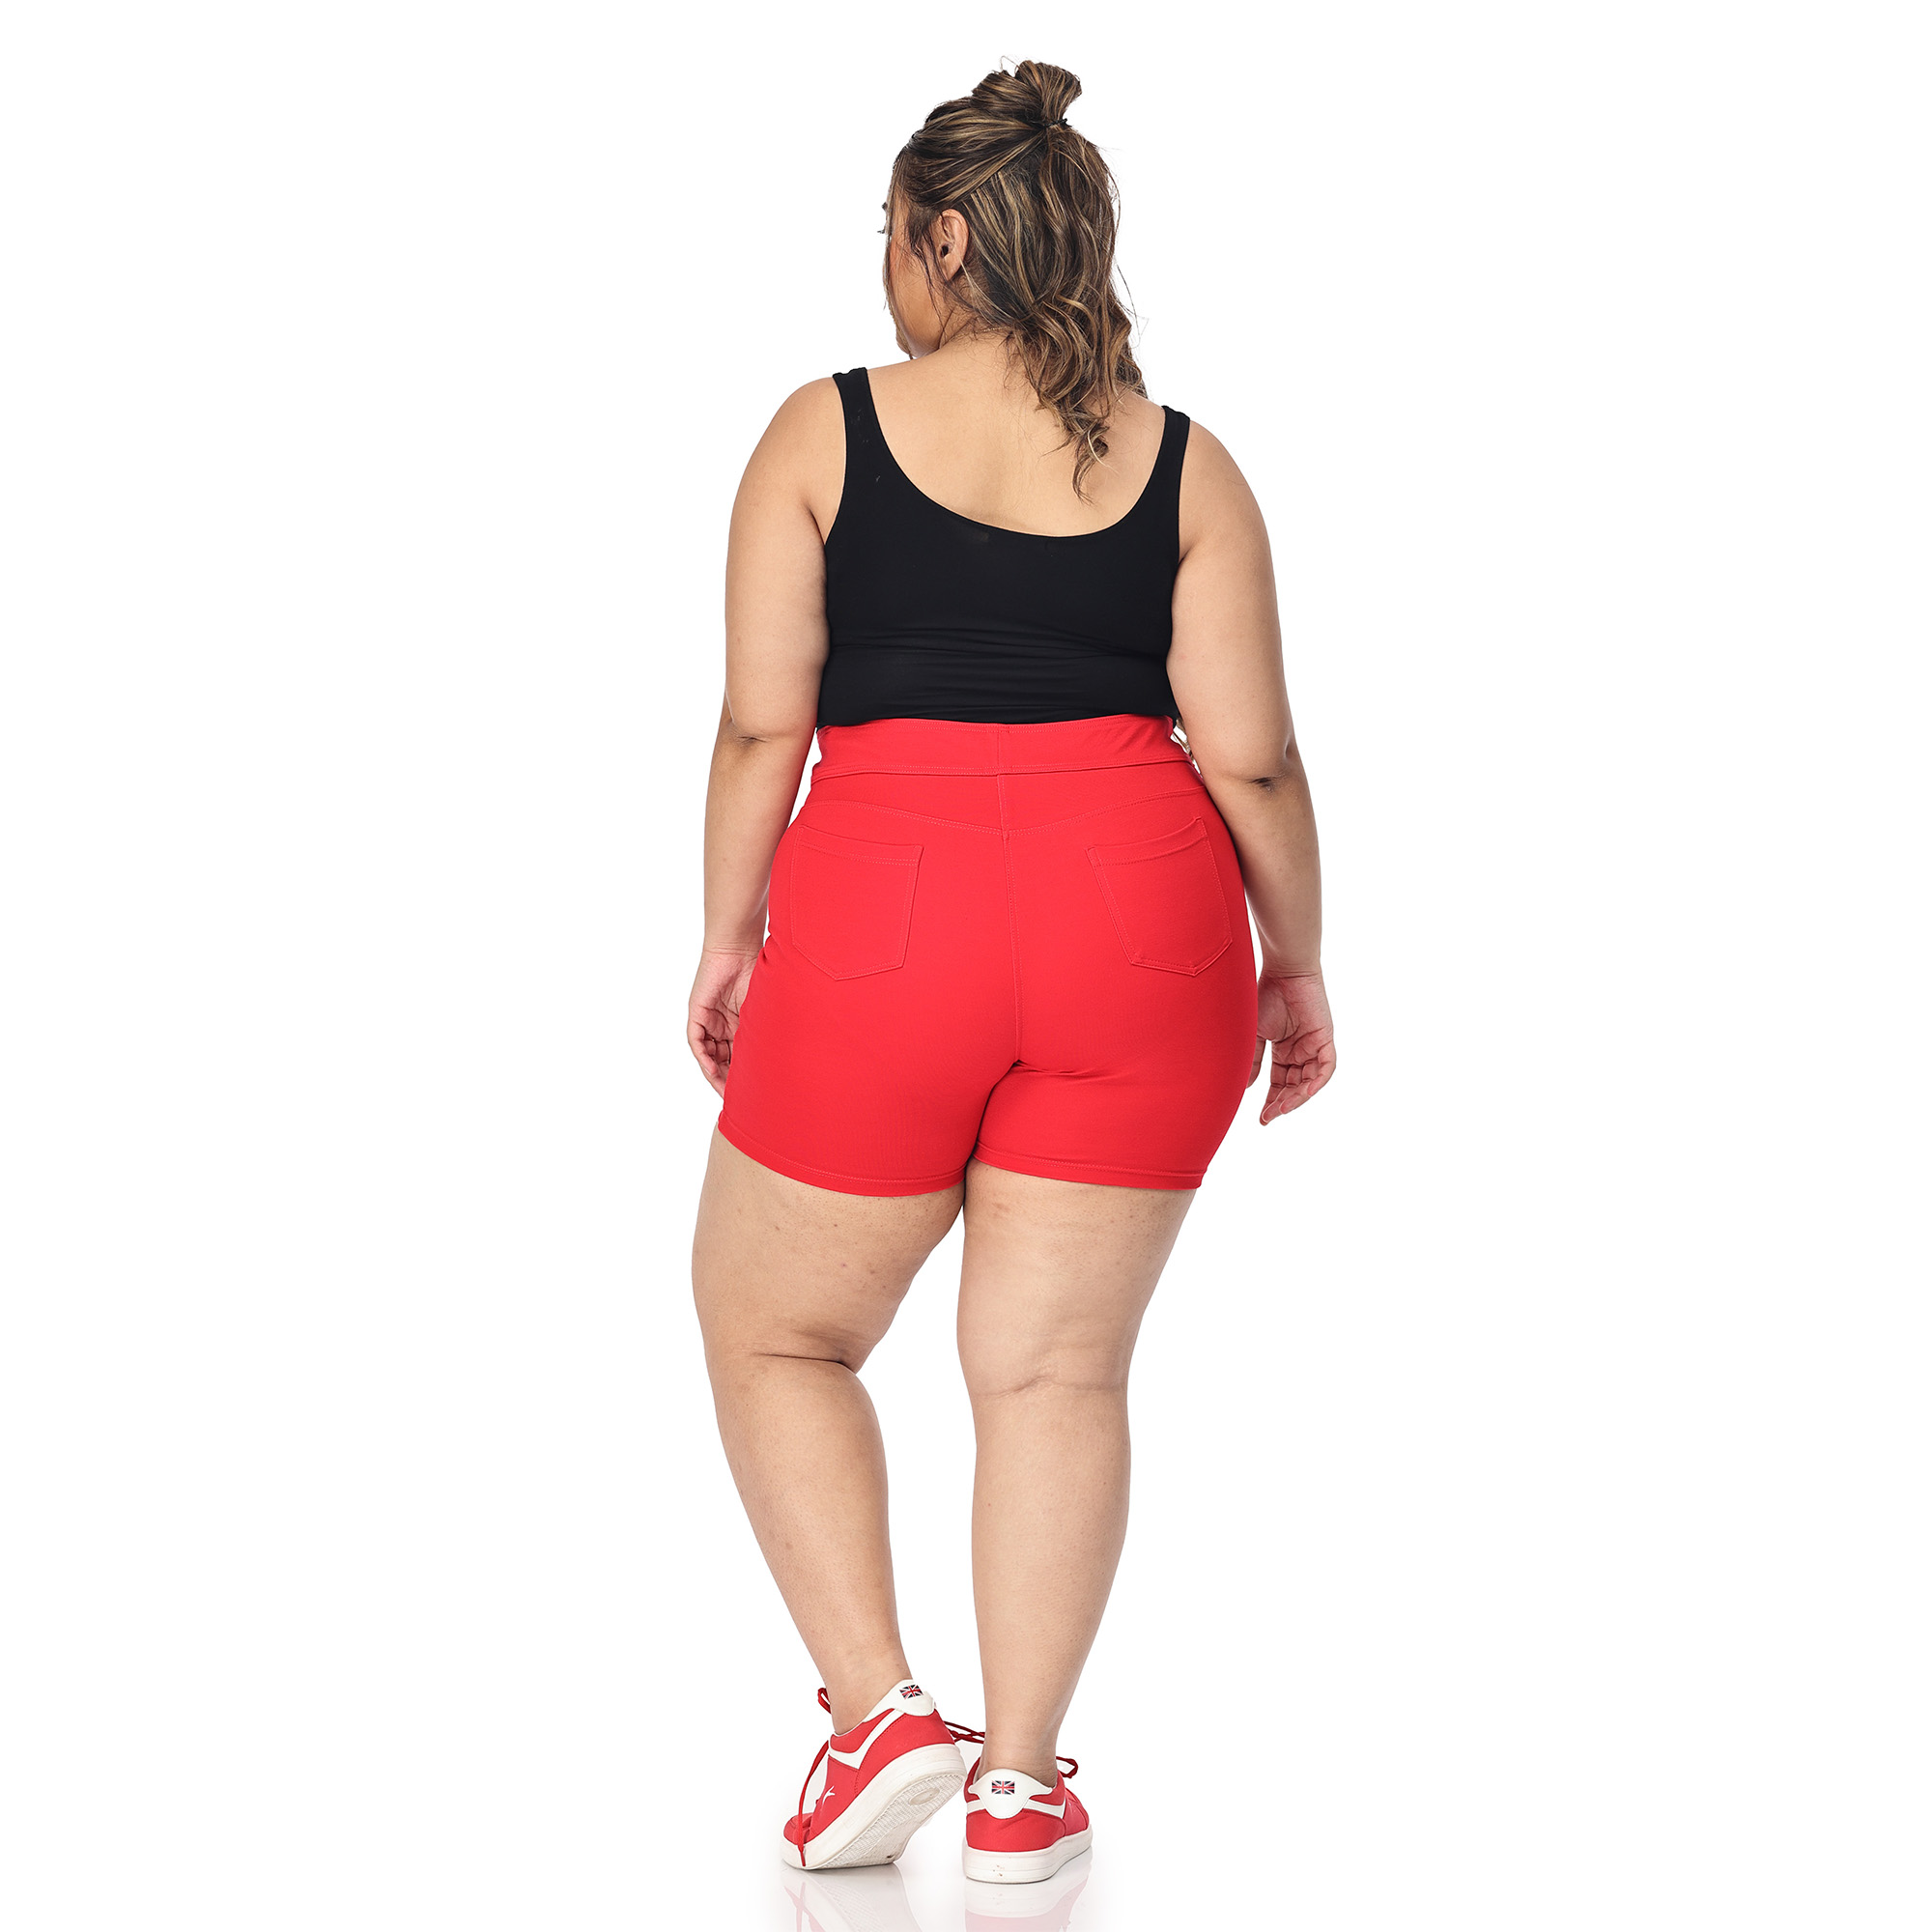 Red shorts women - Plus size active shape wear - 2 back pockets